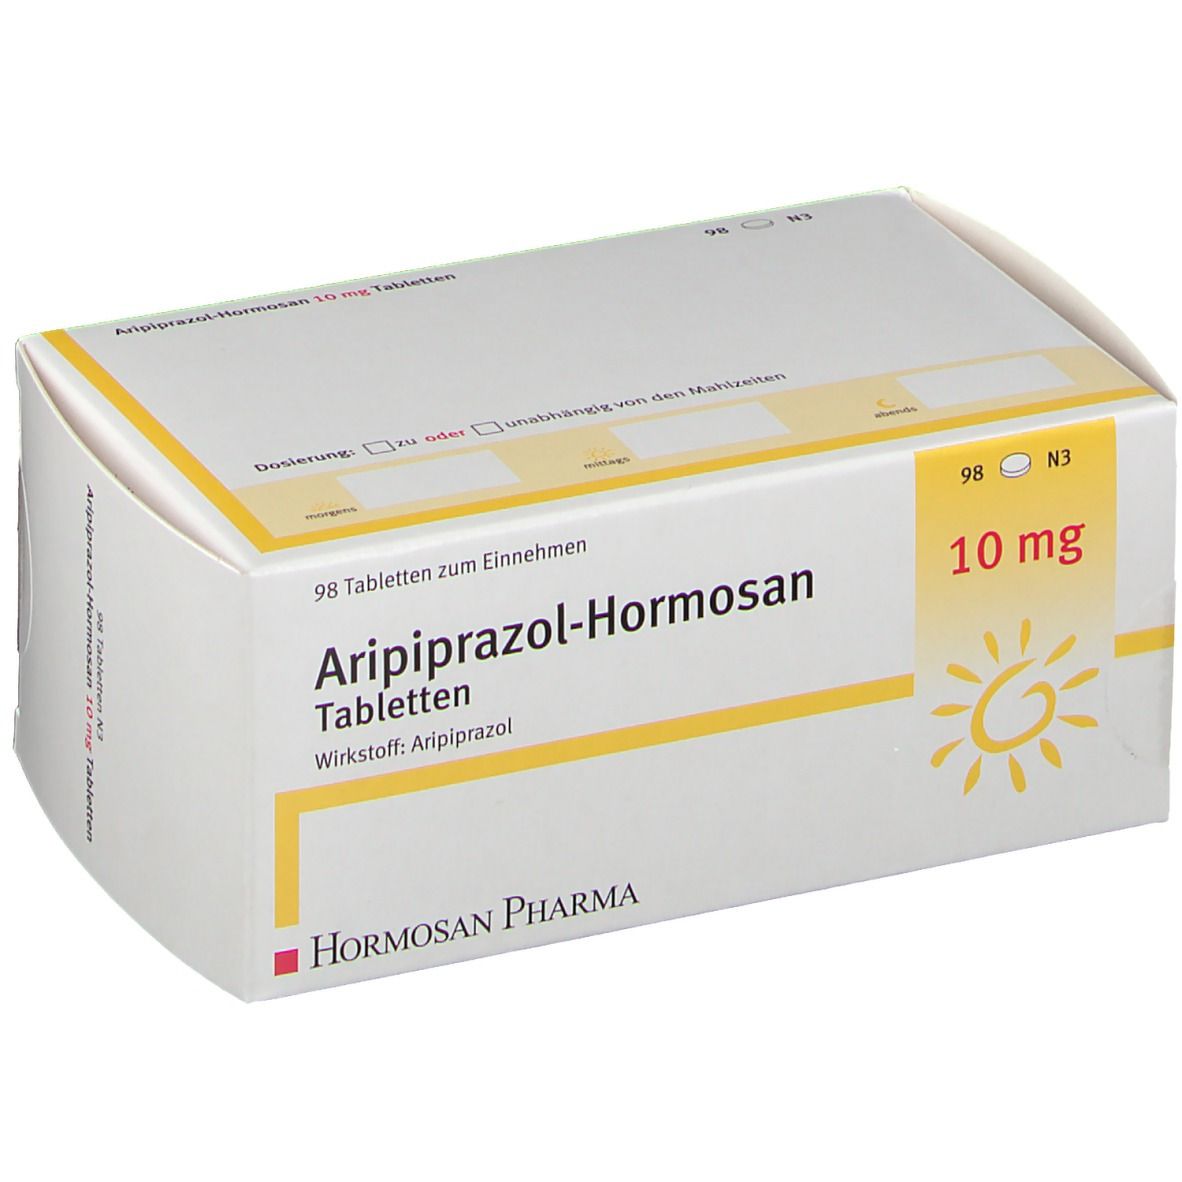 Aripiprazol-Hormosan 10 mg